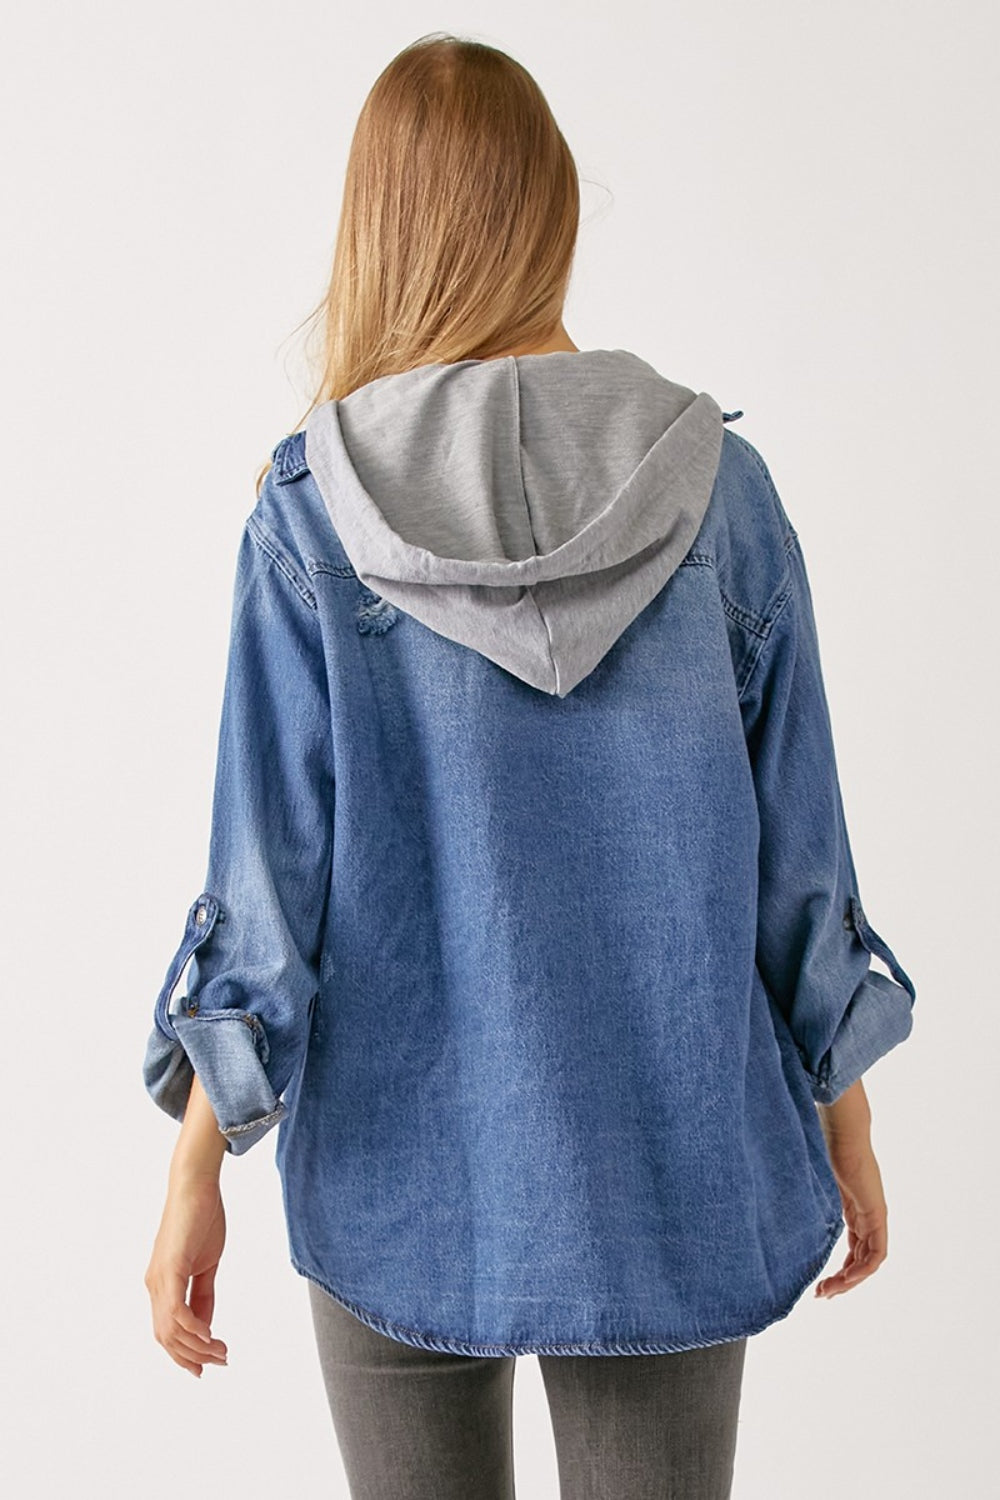 RISEN Zip Up Hooded Denim Shirt - Tigbul's Variety Fashion Shop